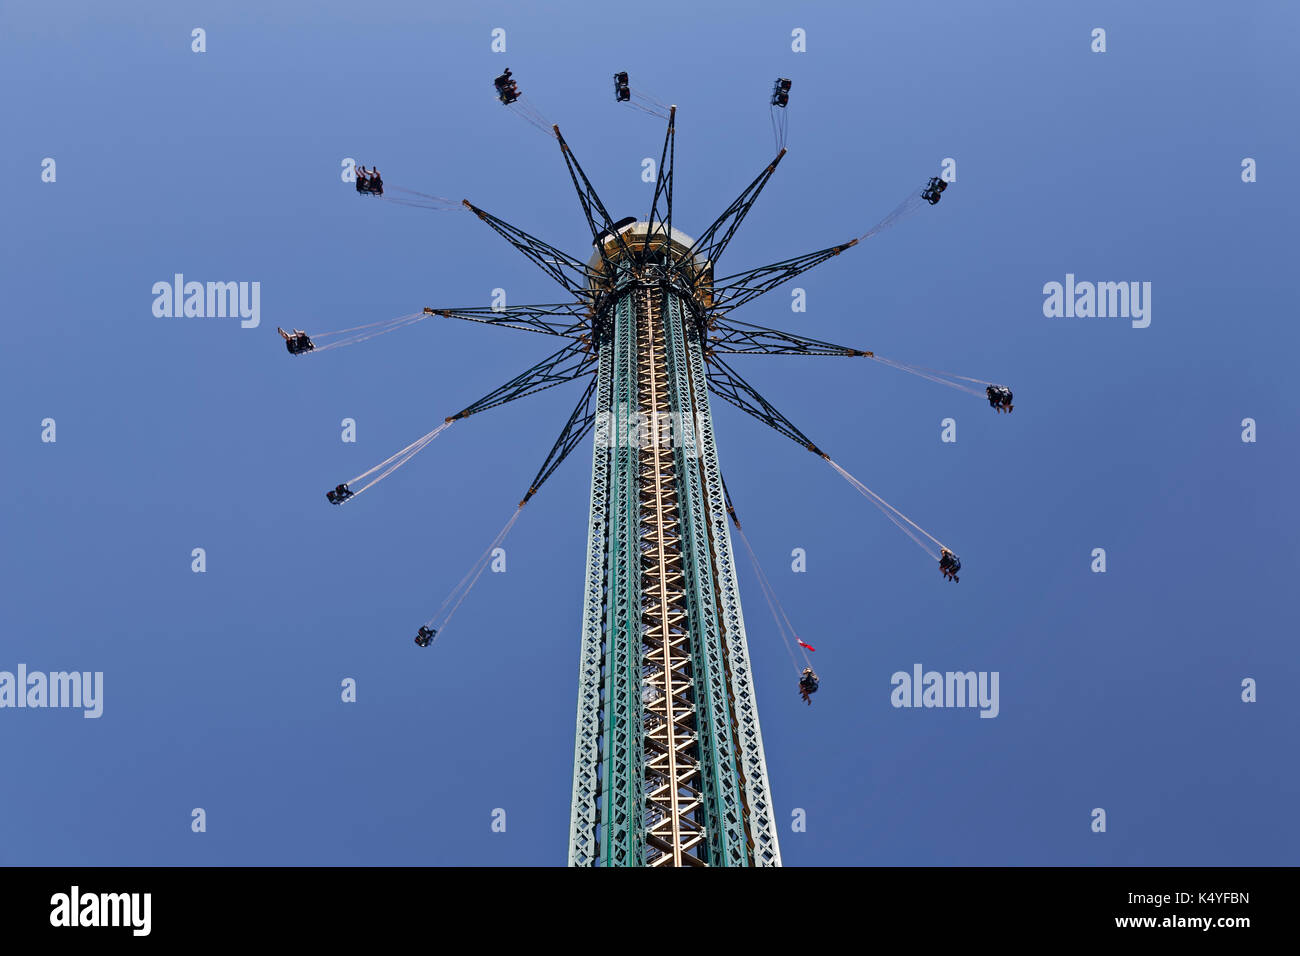 Torre de Prater, chairoplane, Wiener Prater o wurstelprater, parque de diversiones, Viena, Austria Foto de stock